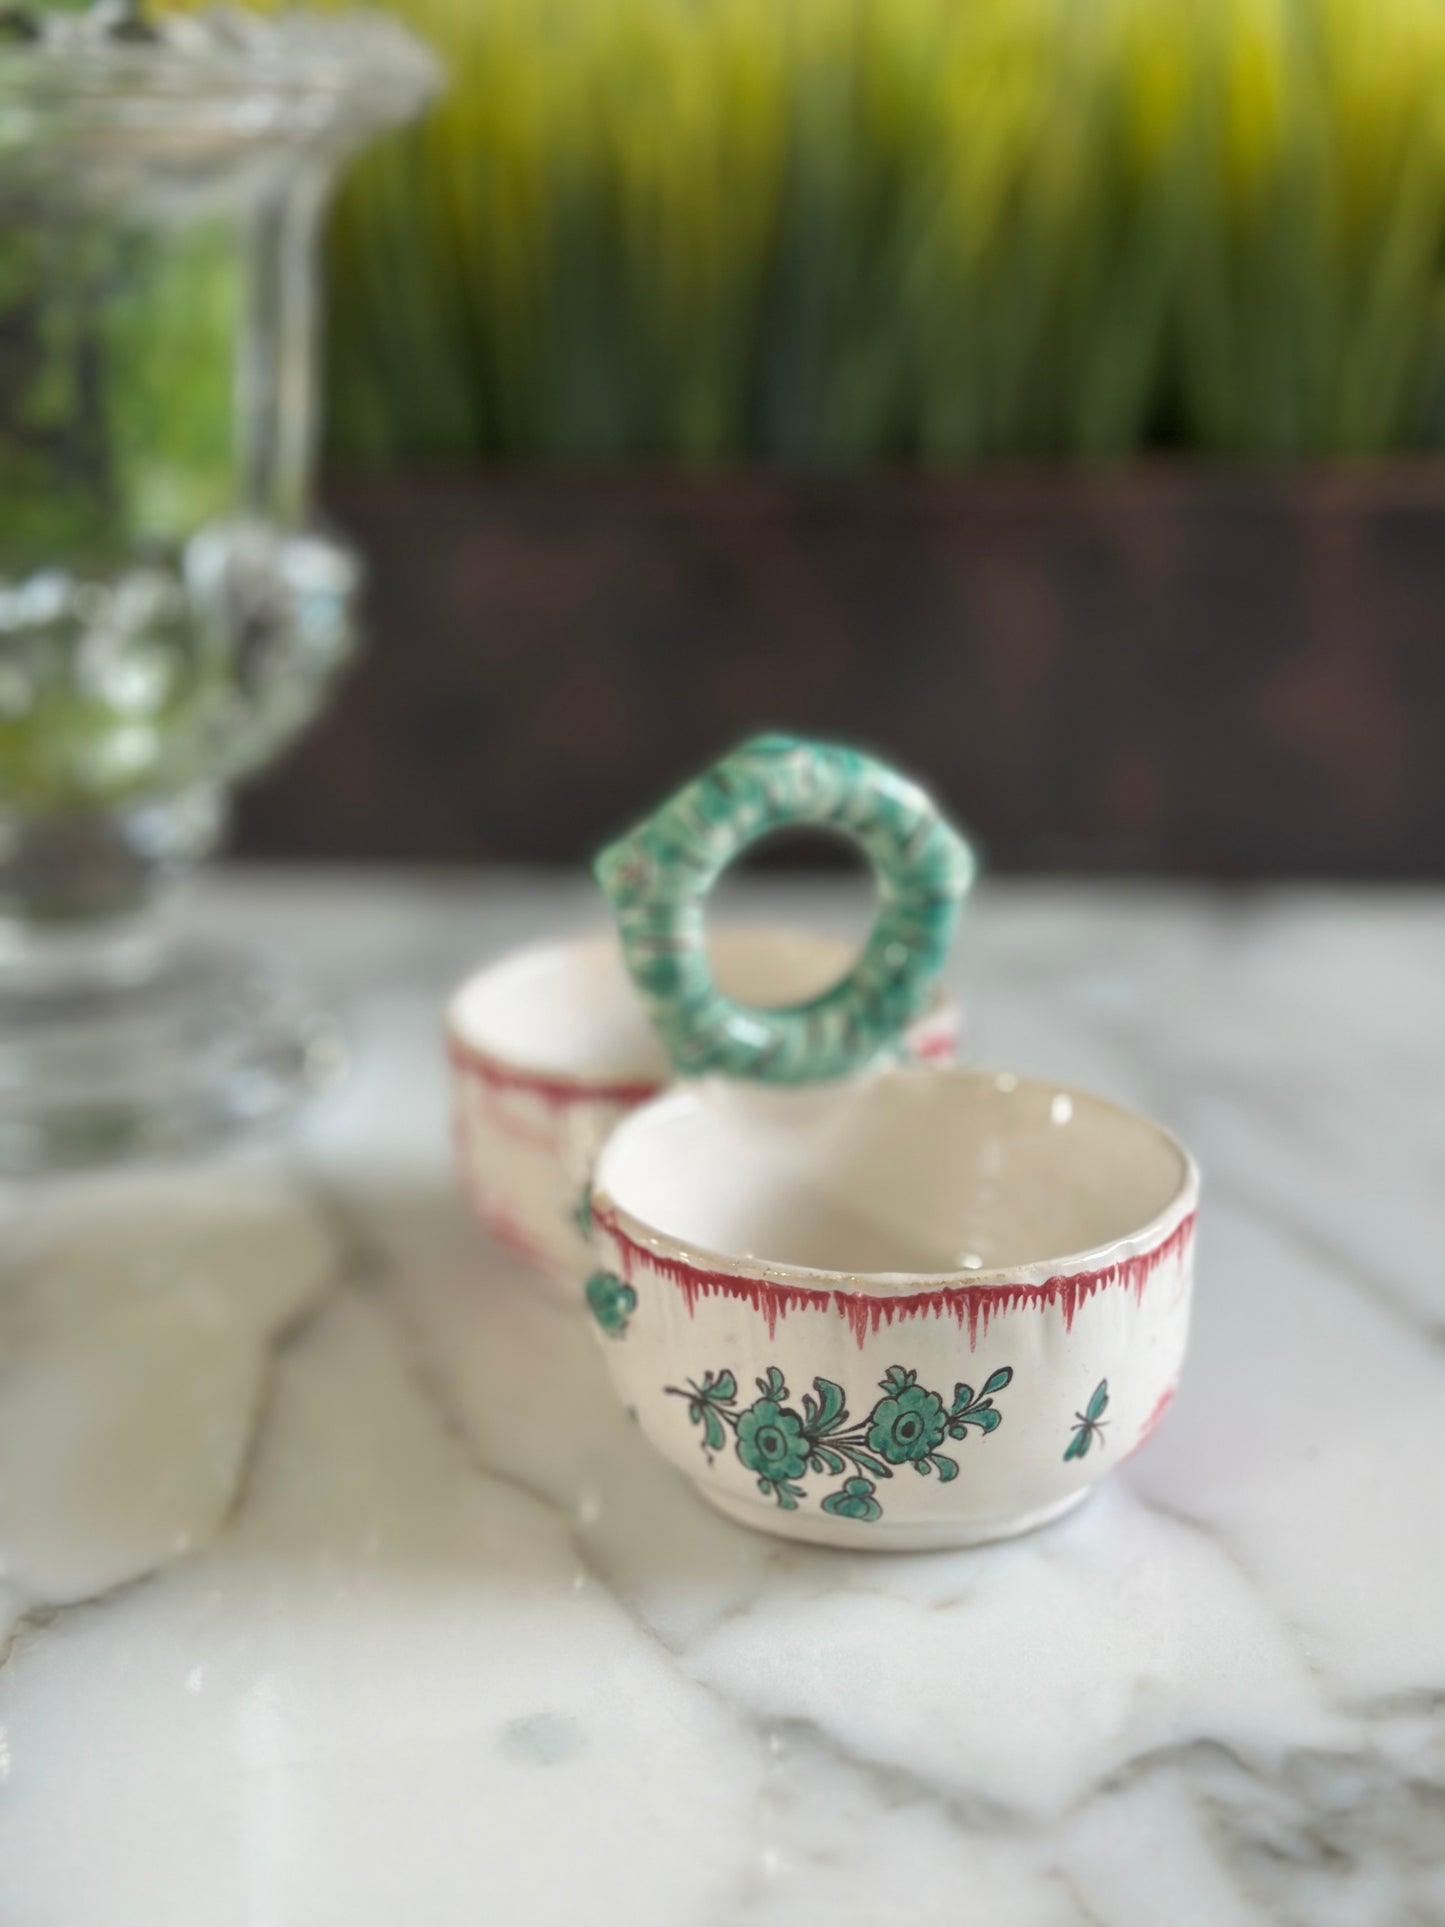 Sceaux ware, tin-glazed earthenware, Pink & Green Salt/Pepper Pot - 1790's